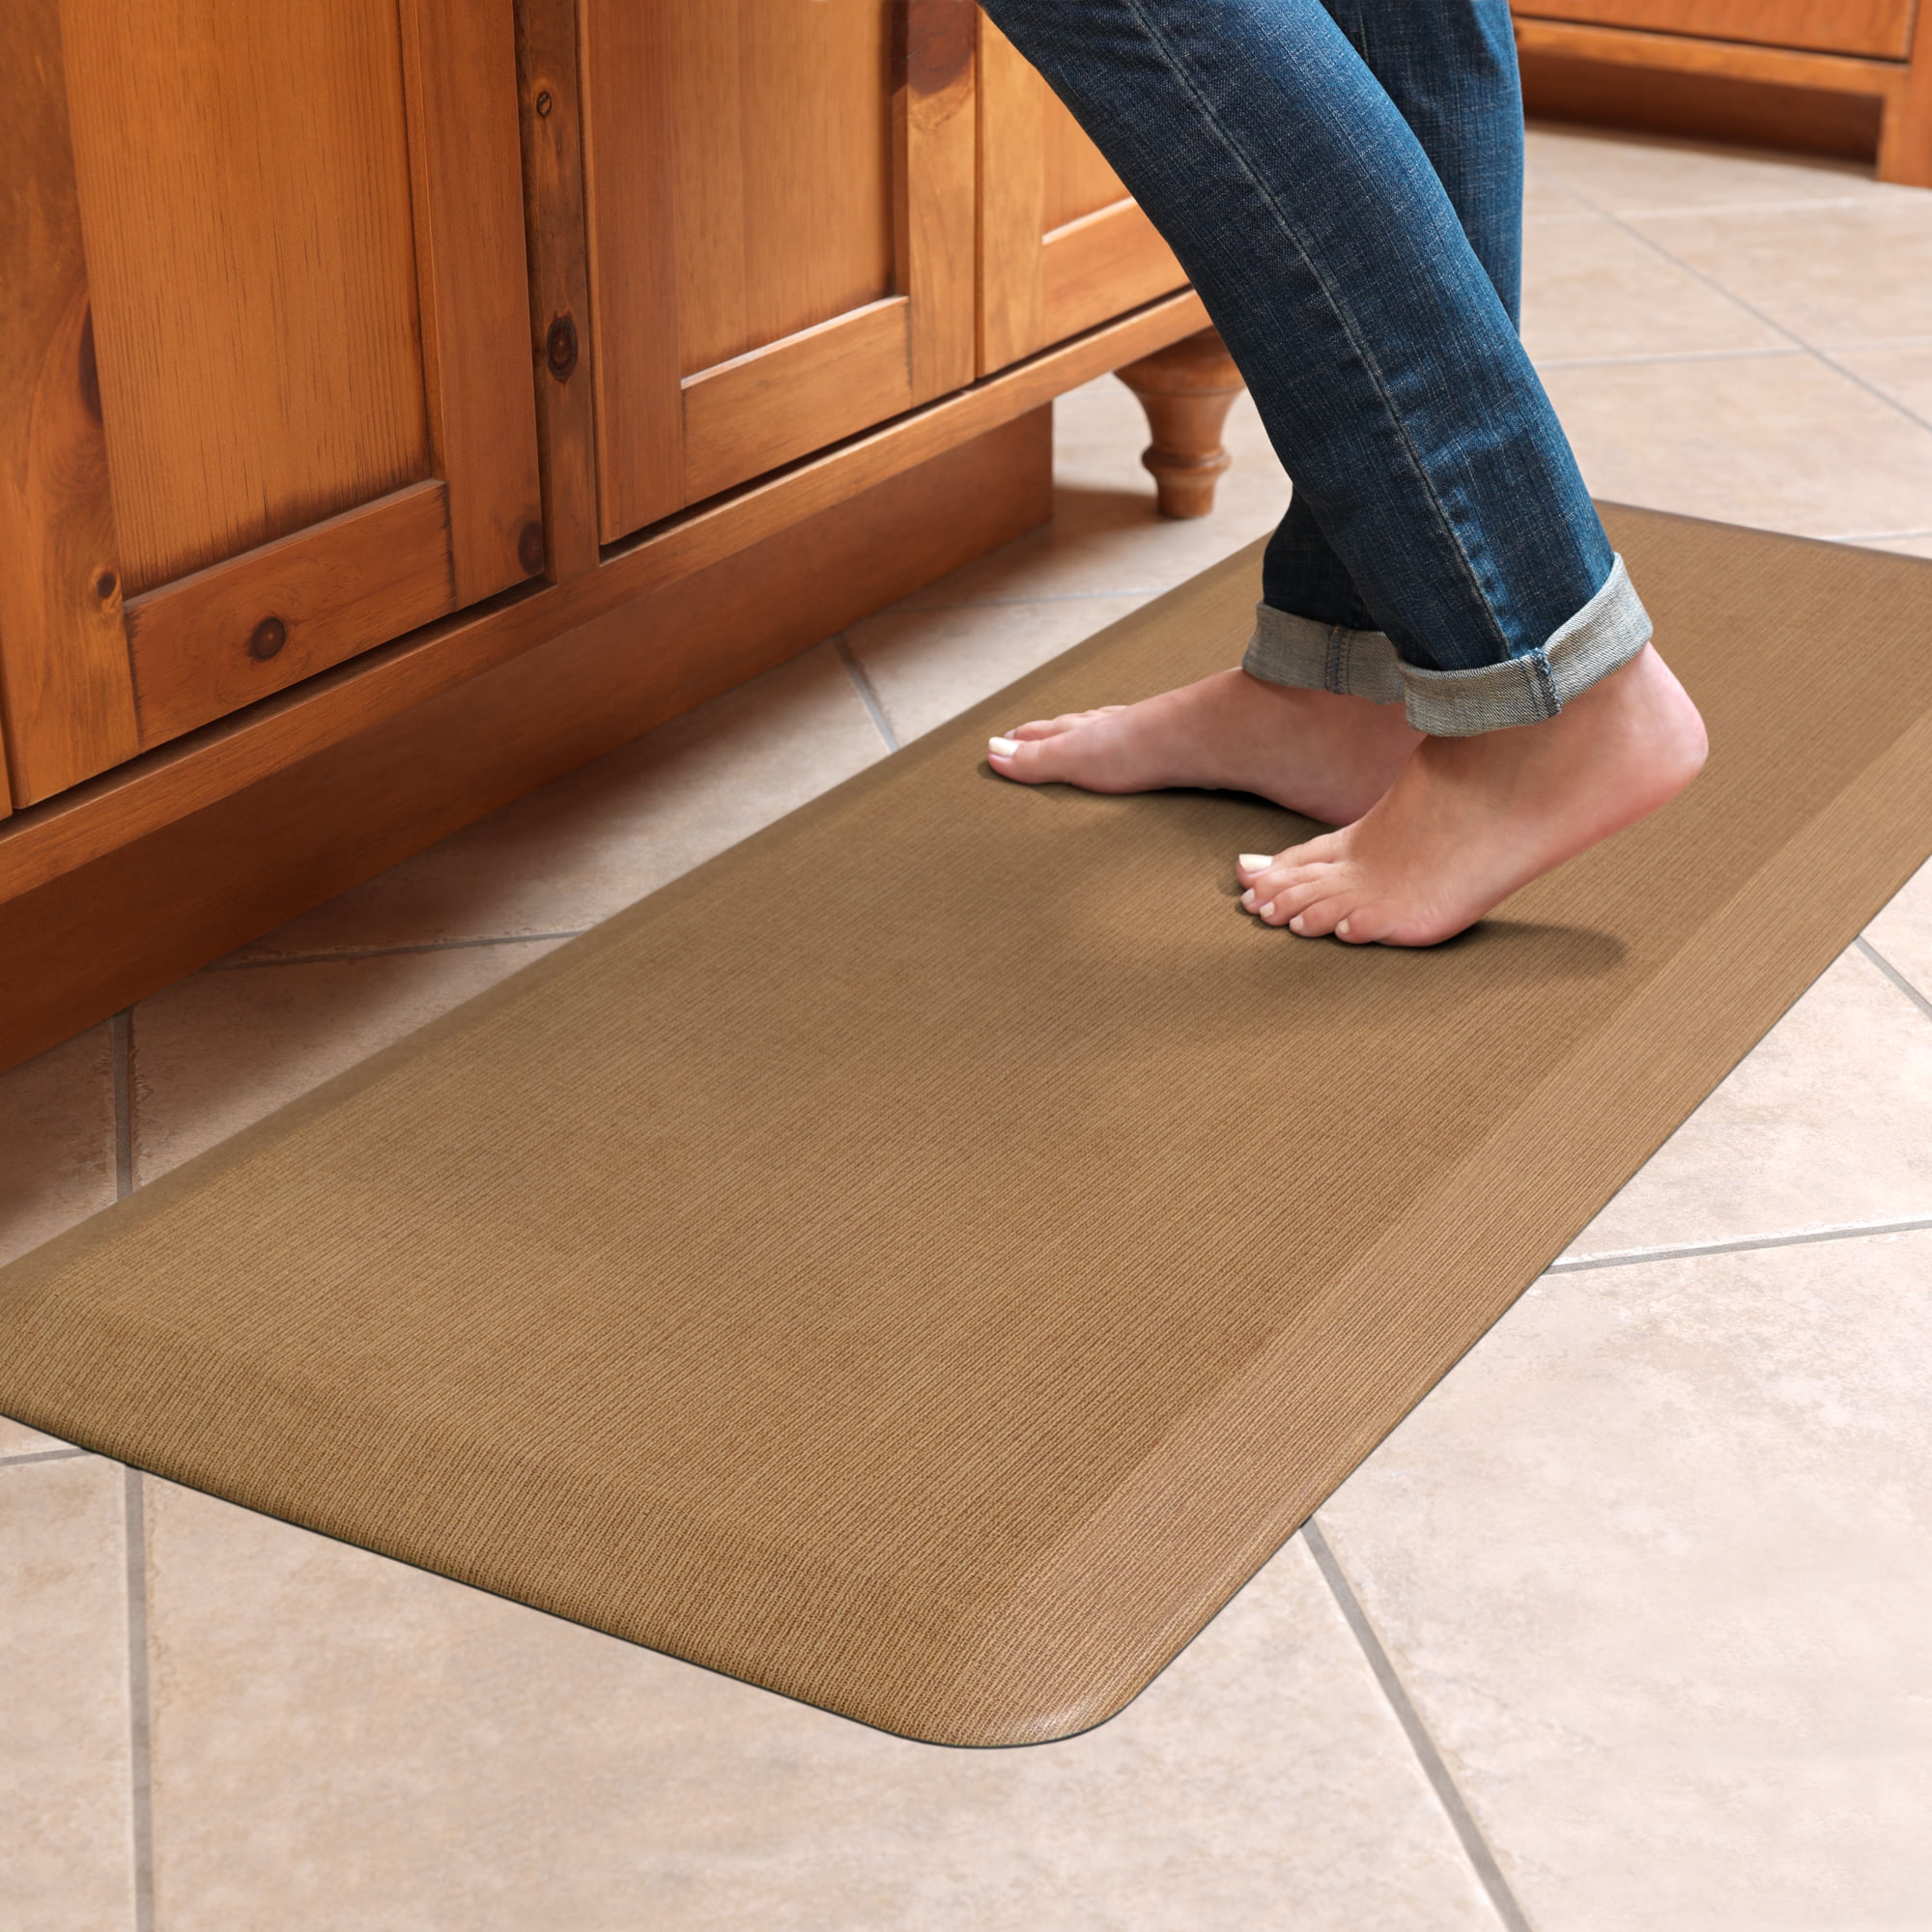  designer kitchen floor mats